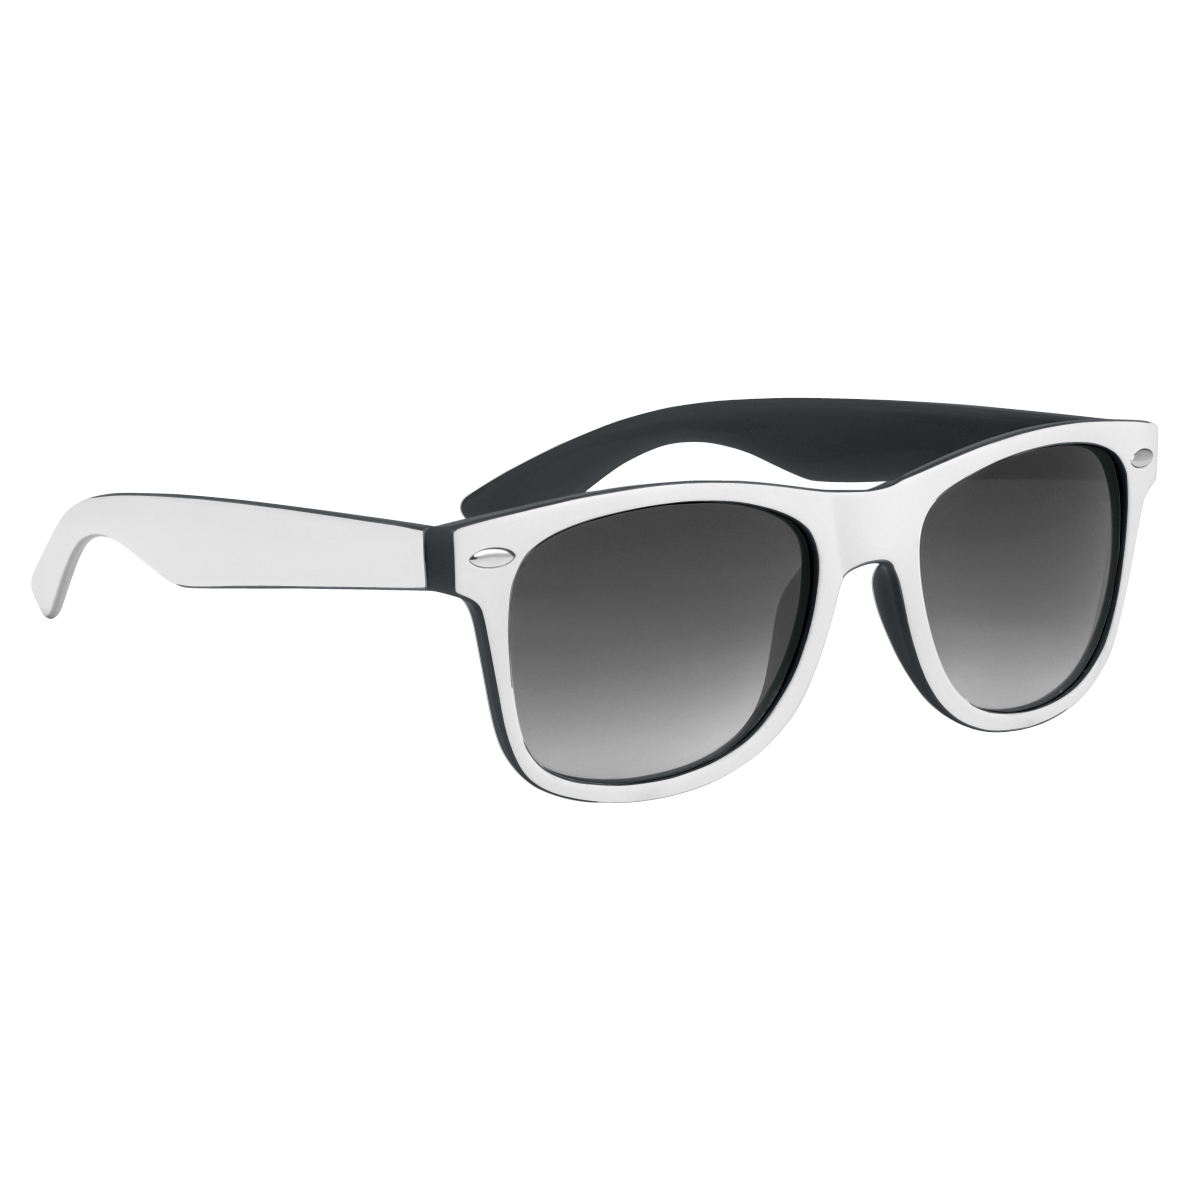 Black with White Trim Two-Tone Malibu Sunglasses